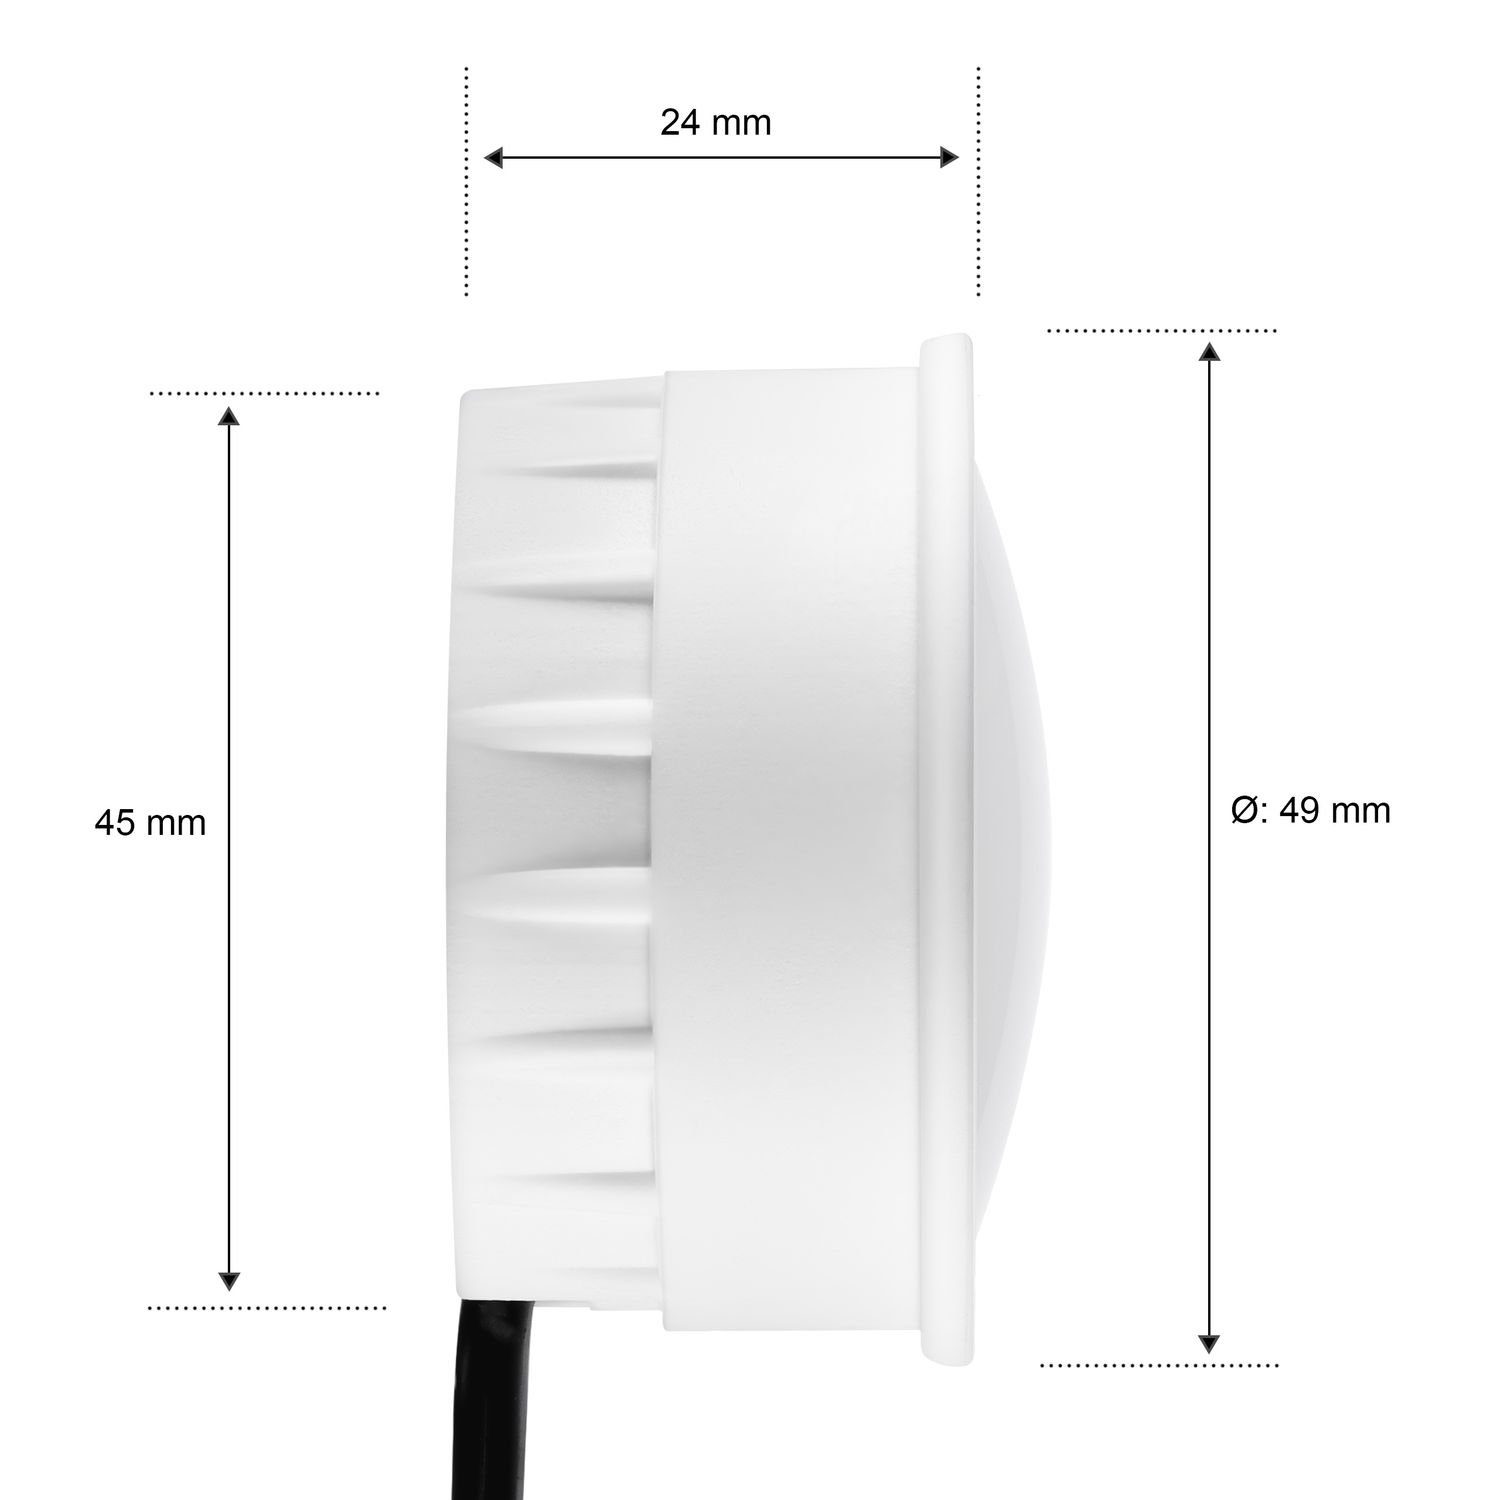 LEDANDO flach Set Einbaustrahler LED mit LED Einbaustrahler extra RGB 10er IP65 CCT schwarz in 5W